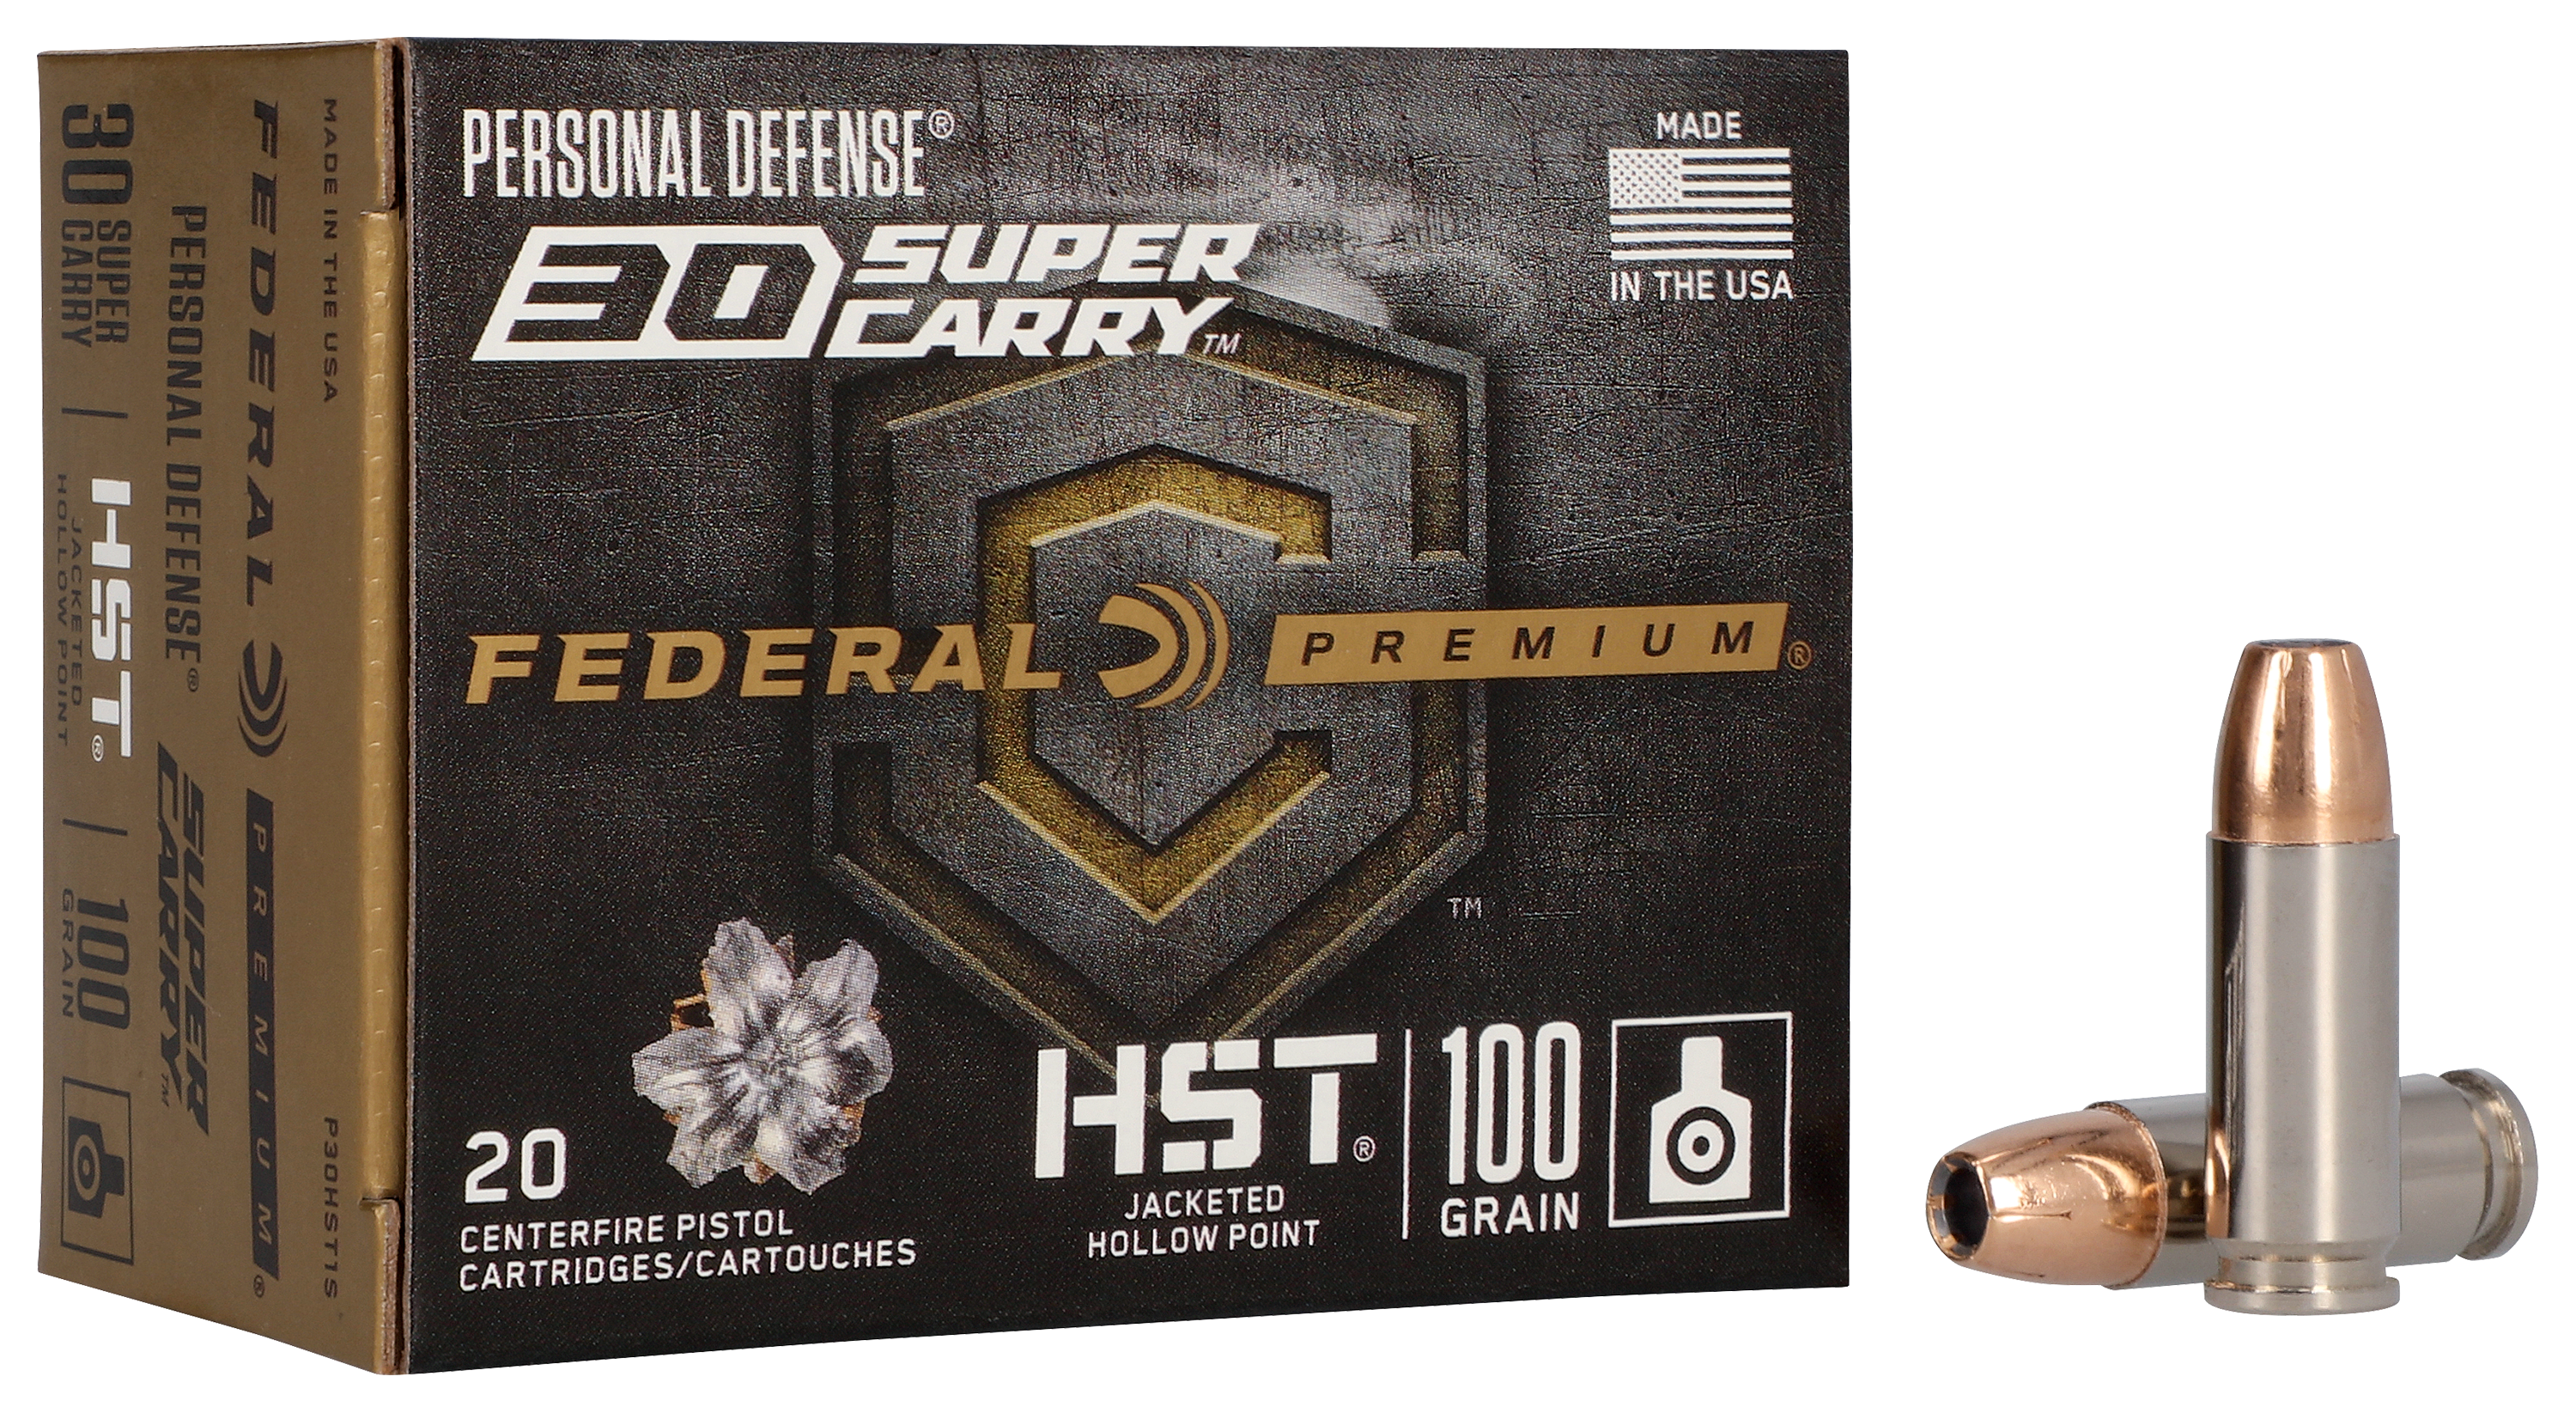 Federal Premium Personal Defense HST Handgun Ammo - .30 Super Carry - 100 Grain